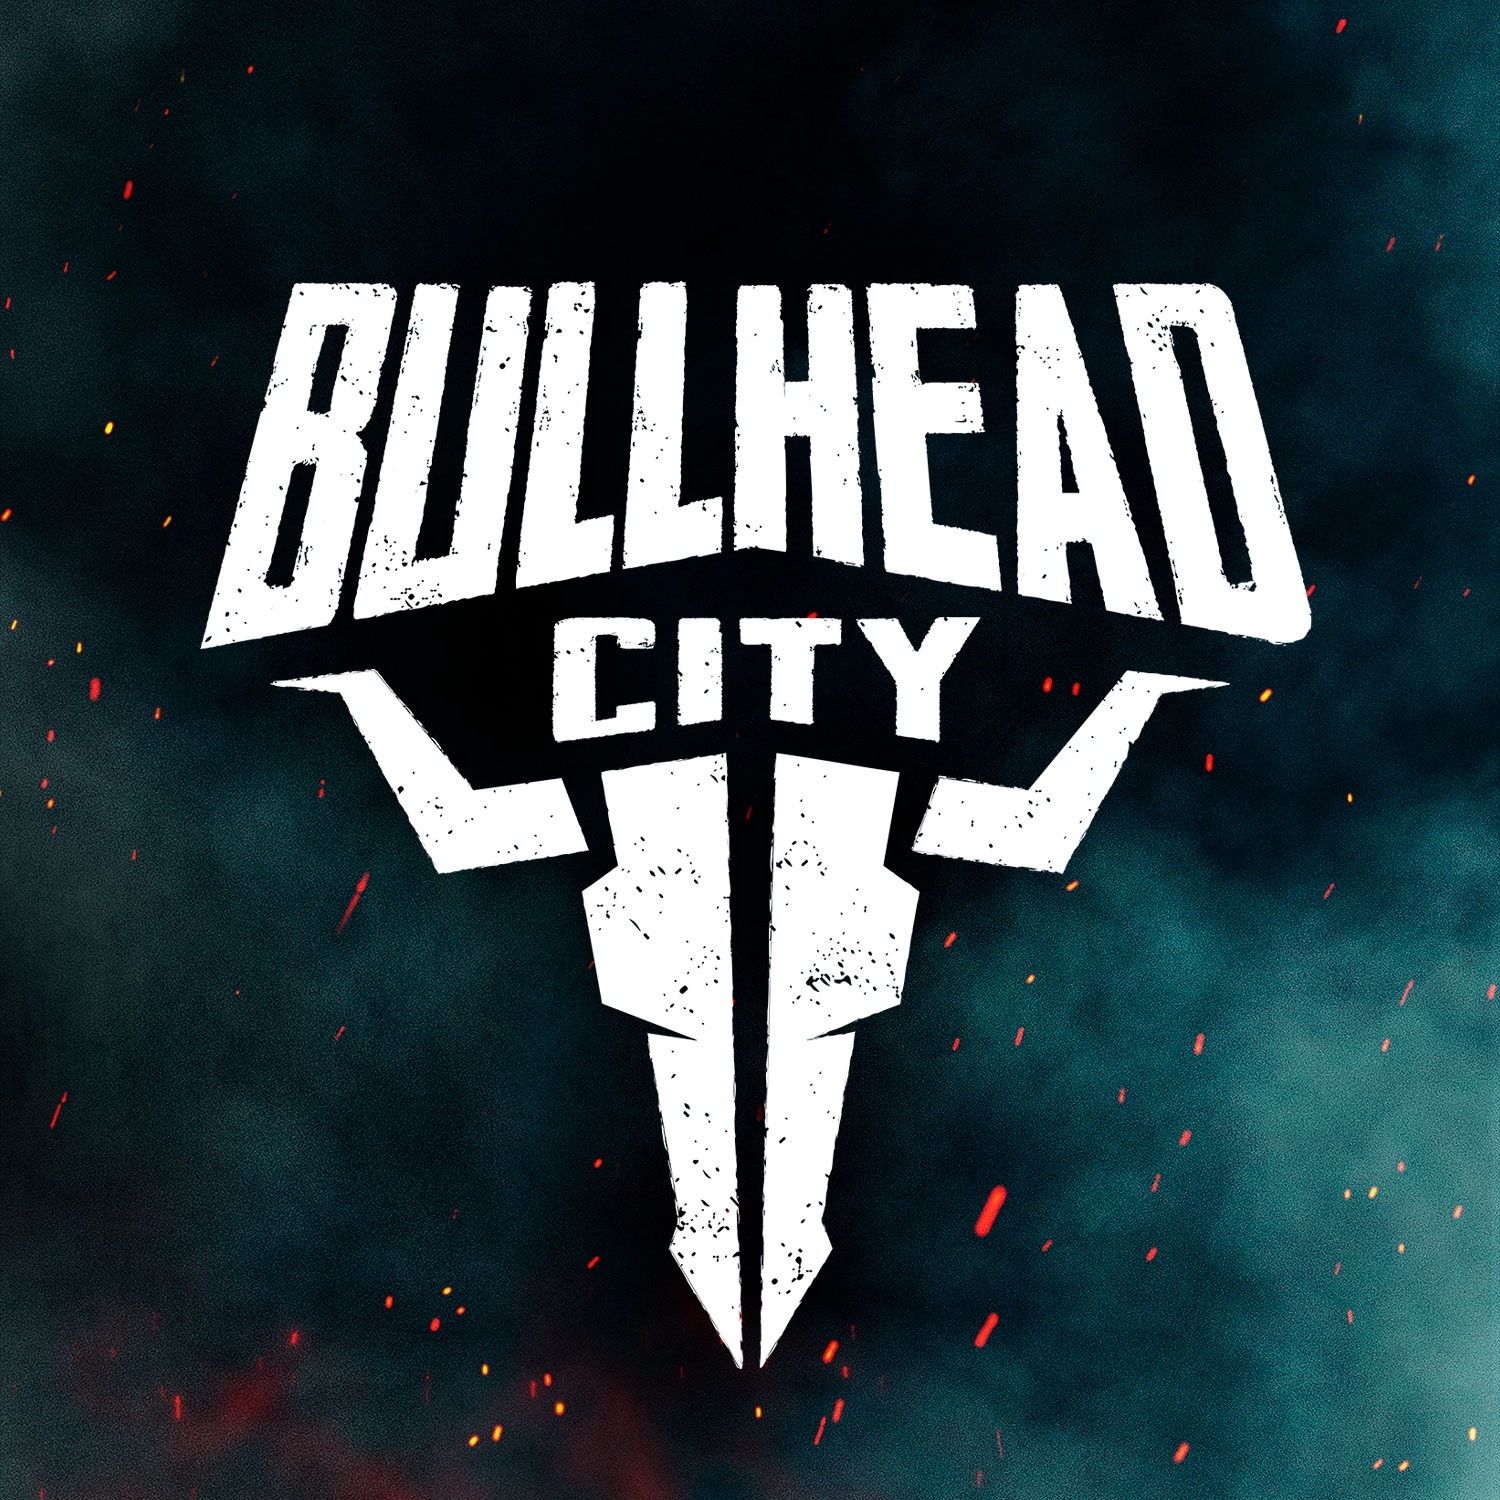 Bullhead City 2021 Logo